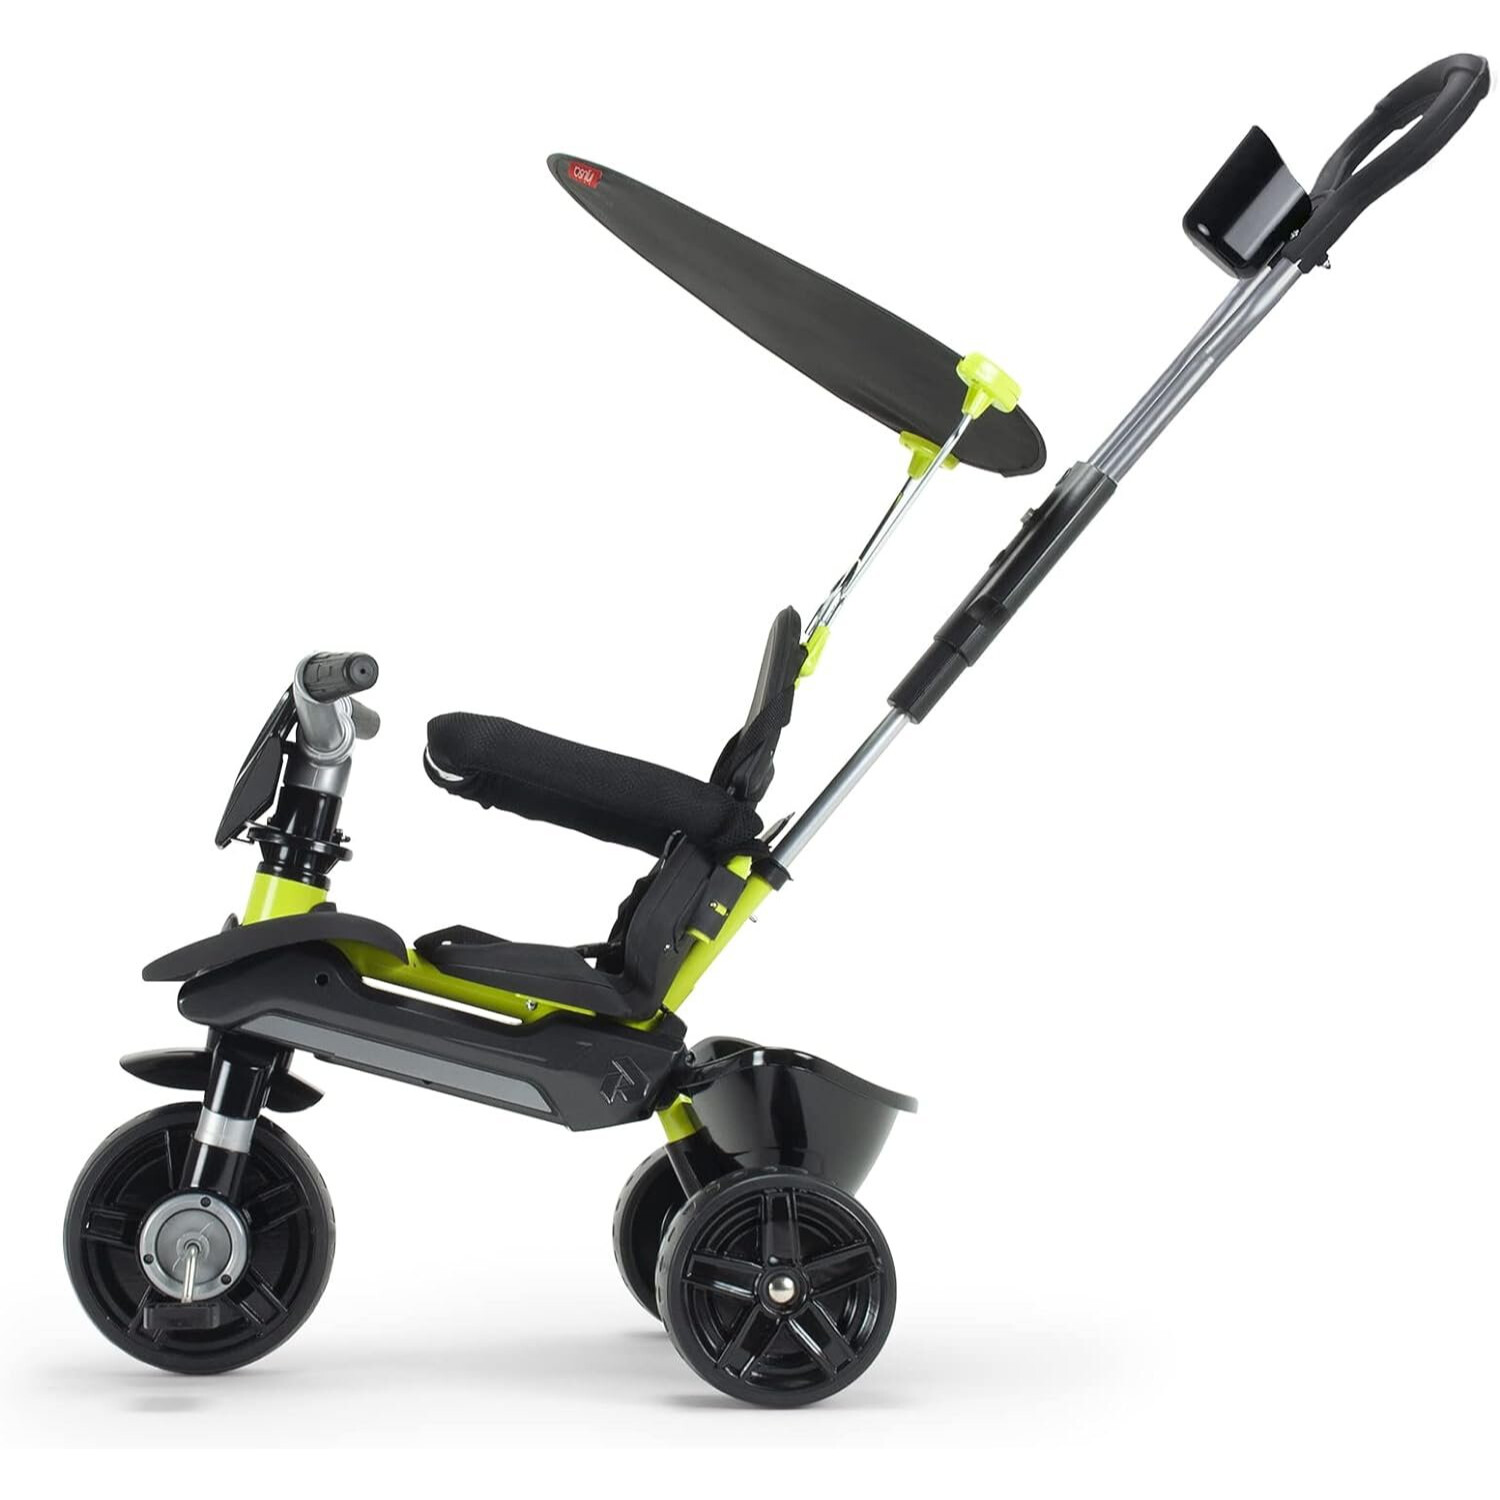 https://f.fcdn.app/imgs/9d26cd/www.atrixuy.com/atriuy/795f/original/catalogo/TBJUG4449_TBJUG4449_2/1500-1500/coche-triciclo-evolutivo-a-pedal-injusa-sport-baby-ninos-coche-triciclo-evolutivo-a-pedal-injusa-sport-baby-ninos.jpg